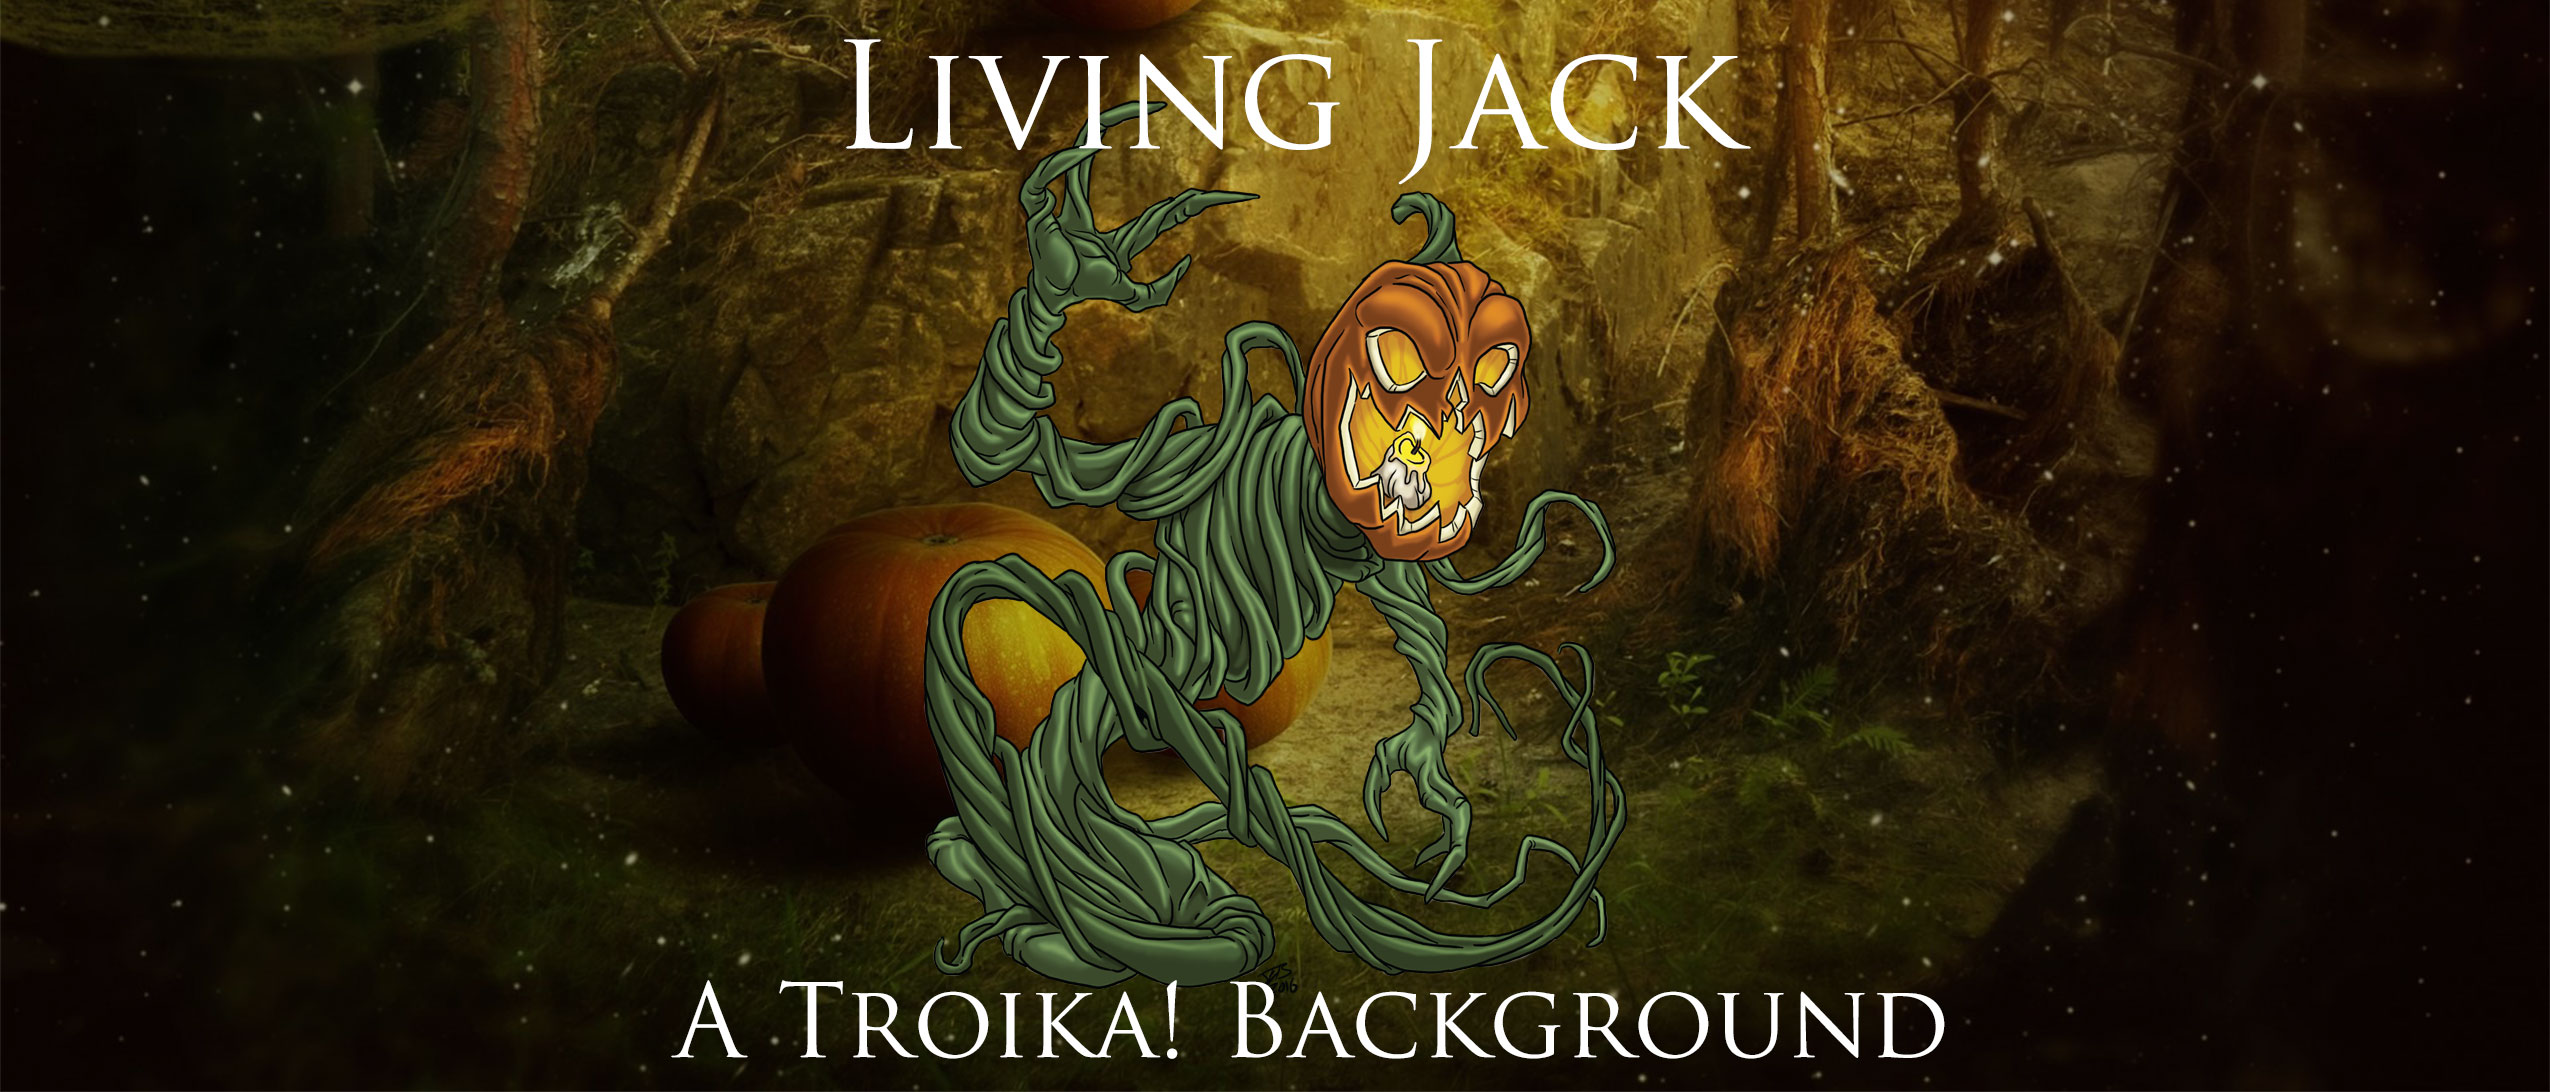 Living Jack - A Troika! Background